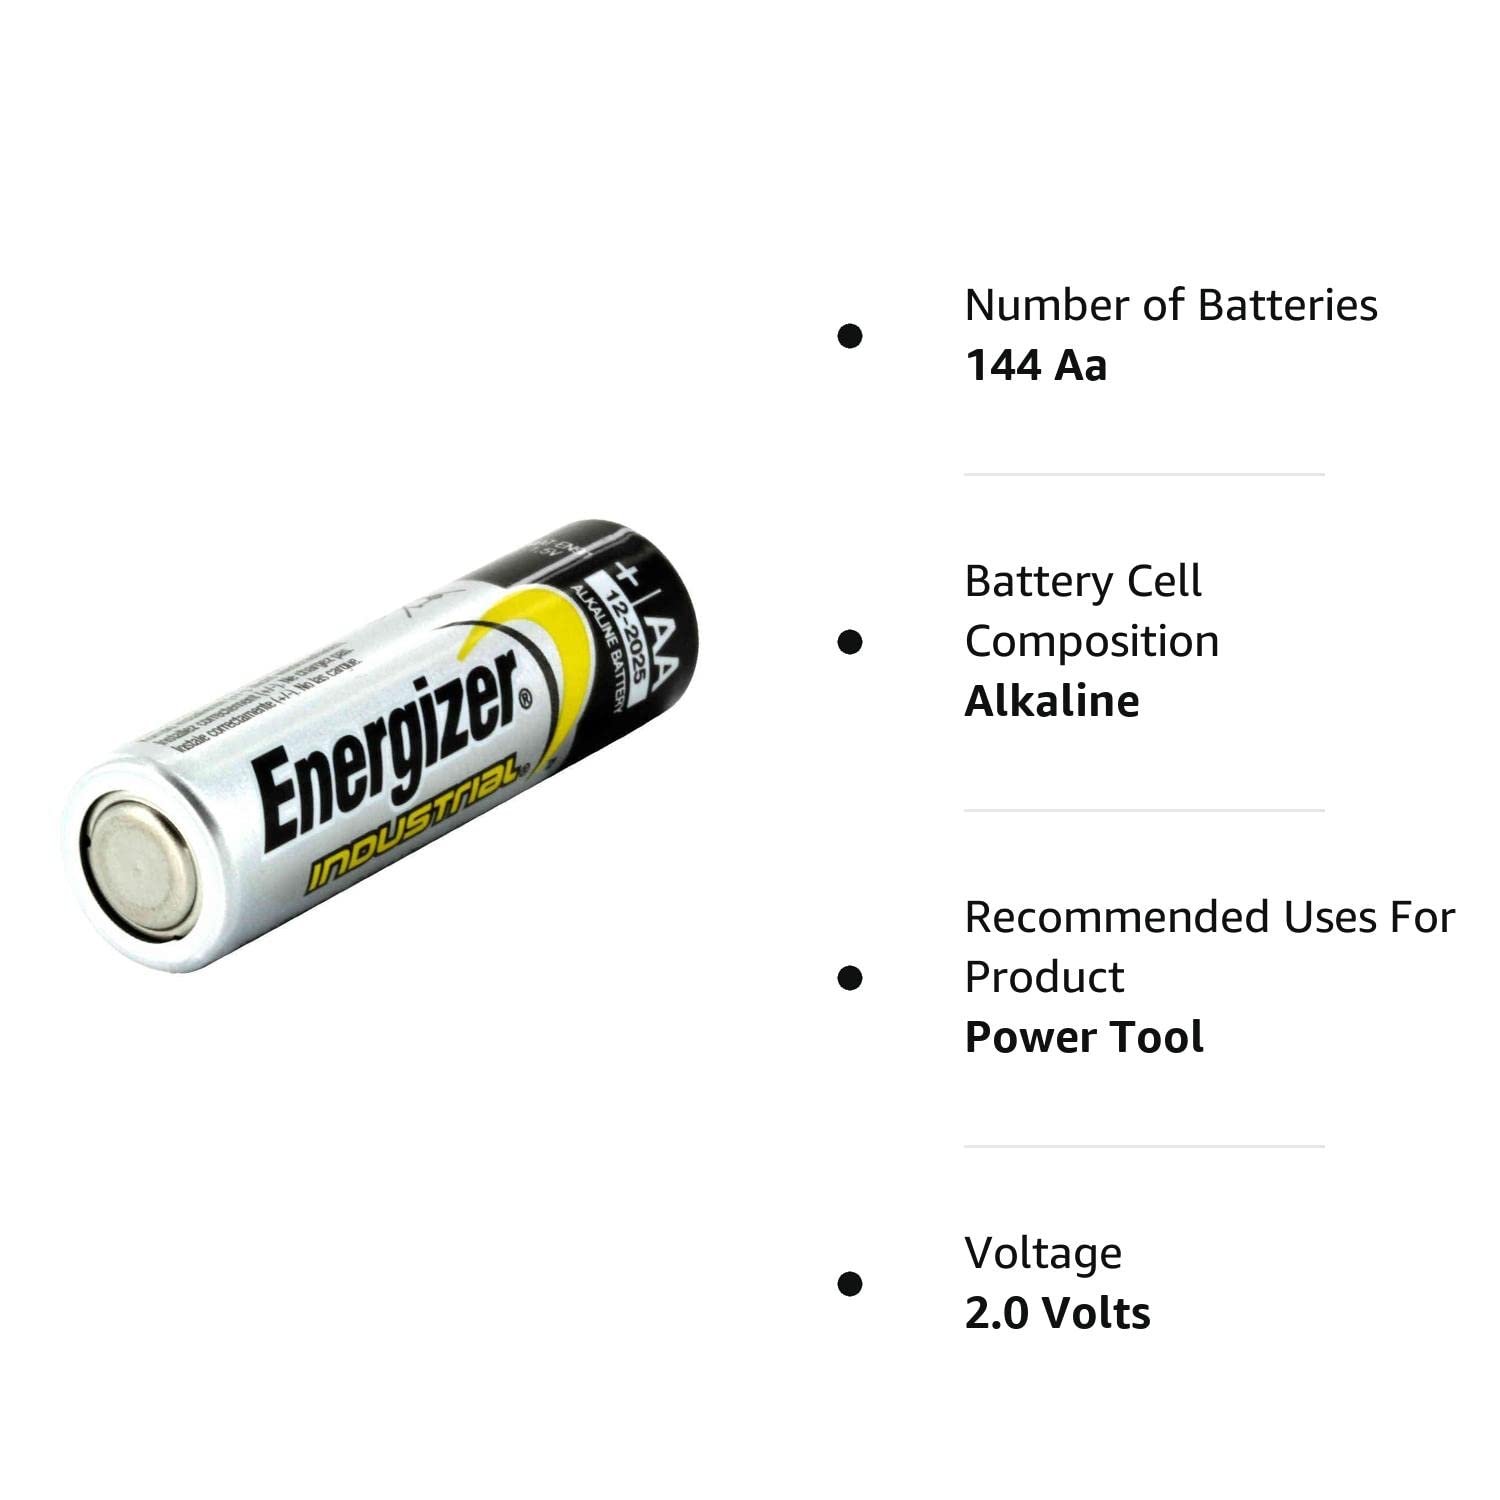 Energizer EN91 AA Industrial Alkaline 144 Batteries by Energizer